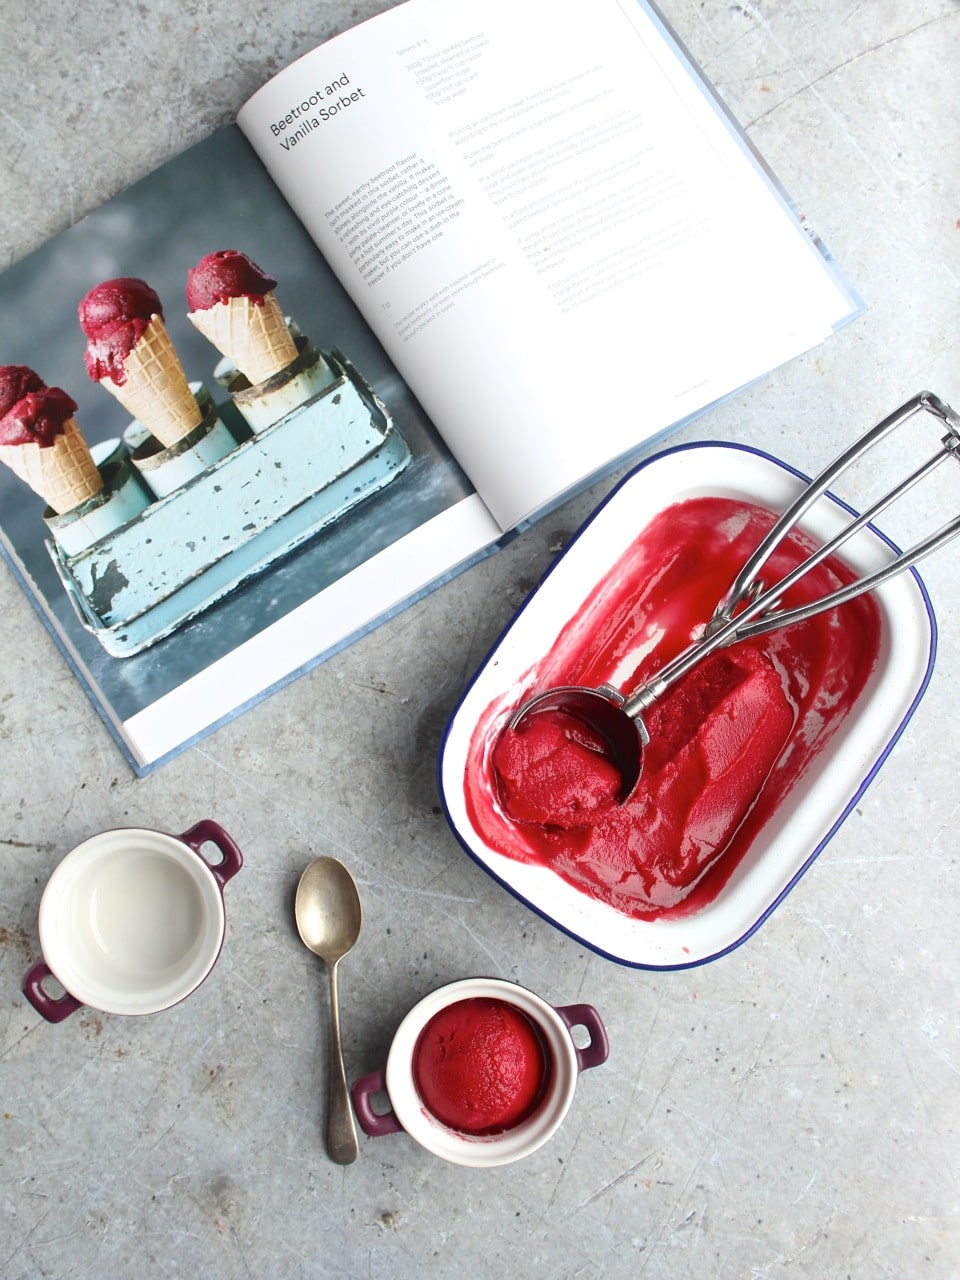 Vegan Beetroot and Vanilla Sorbet Recipe. Review of Veggie Desserts + Cakes Cookbook by Kate Hackworthy